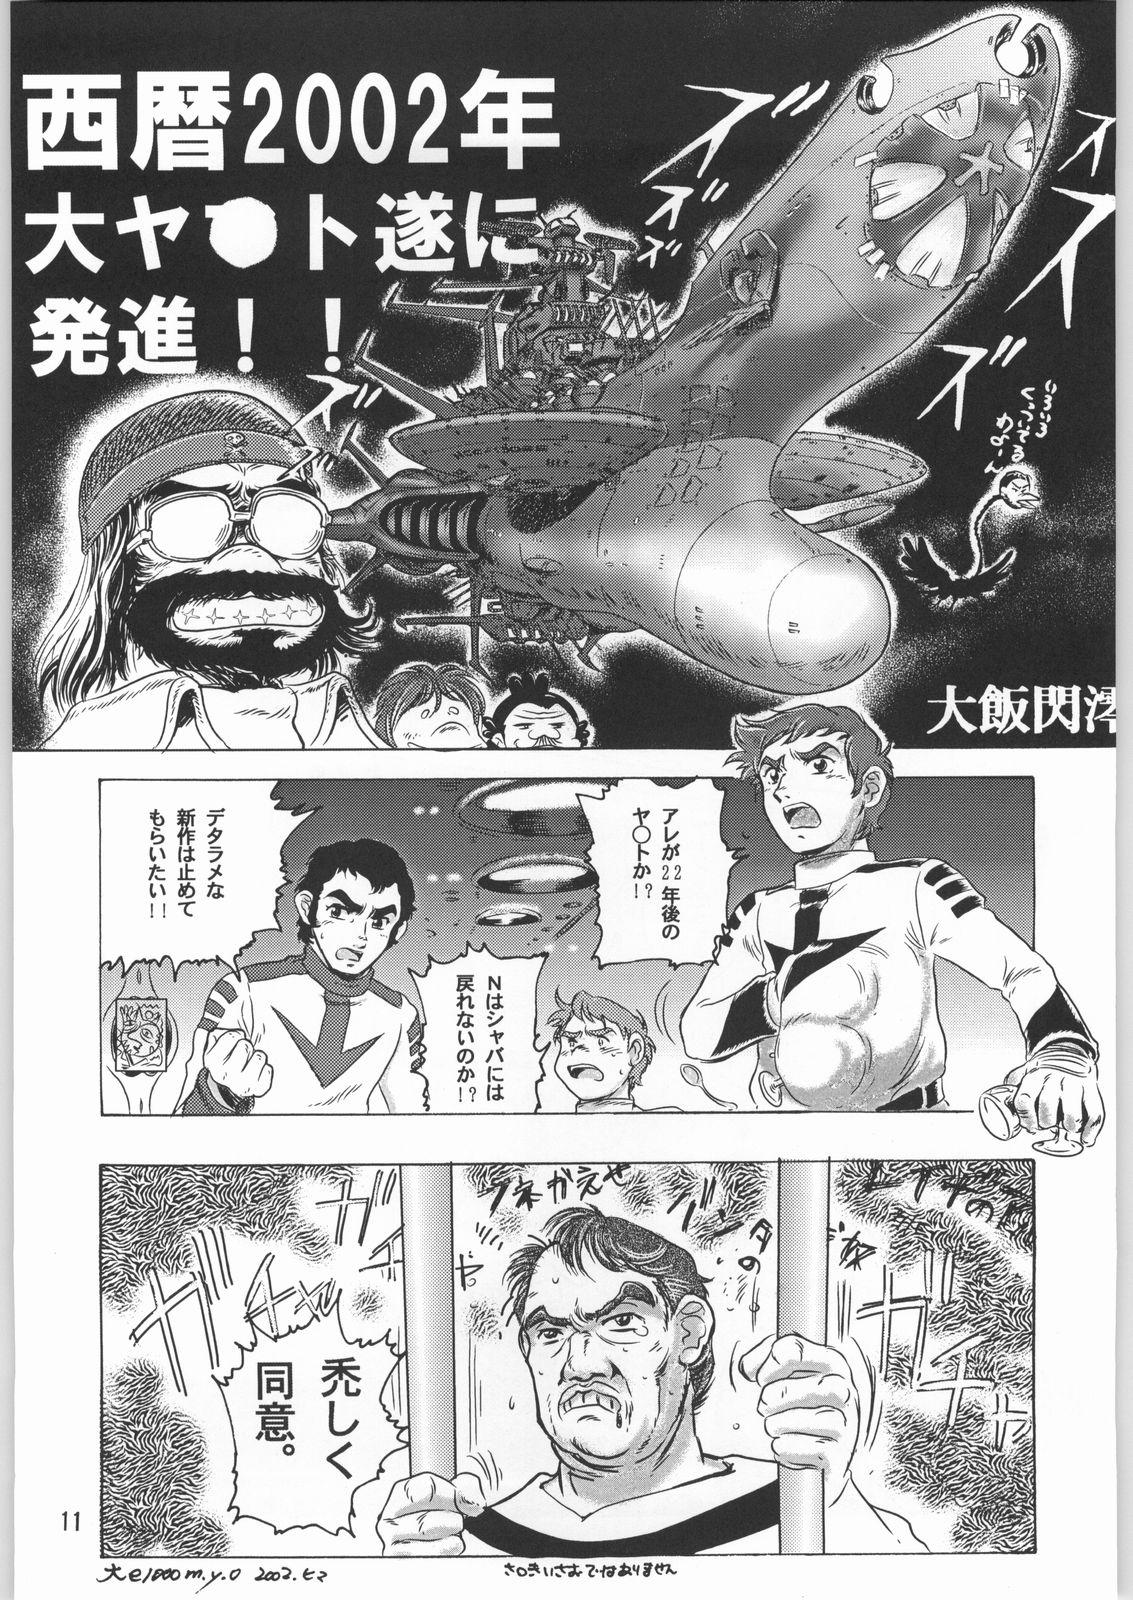 Putas Megaton Punch 1 - Space battleship yamato Chobits Public Nudity - Page 10